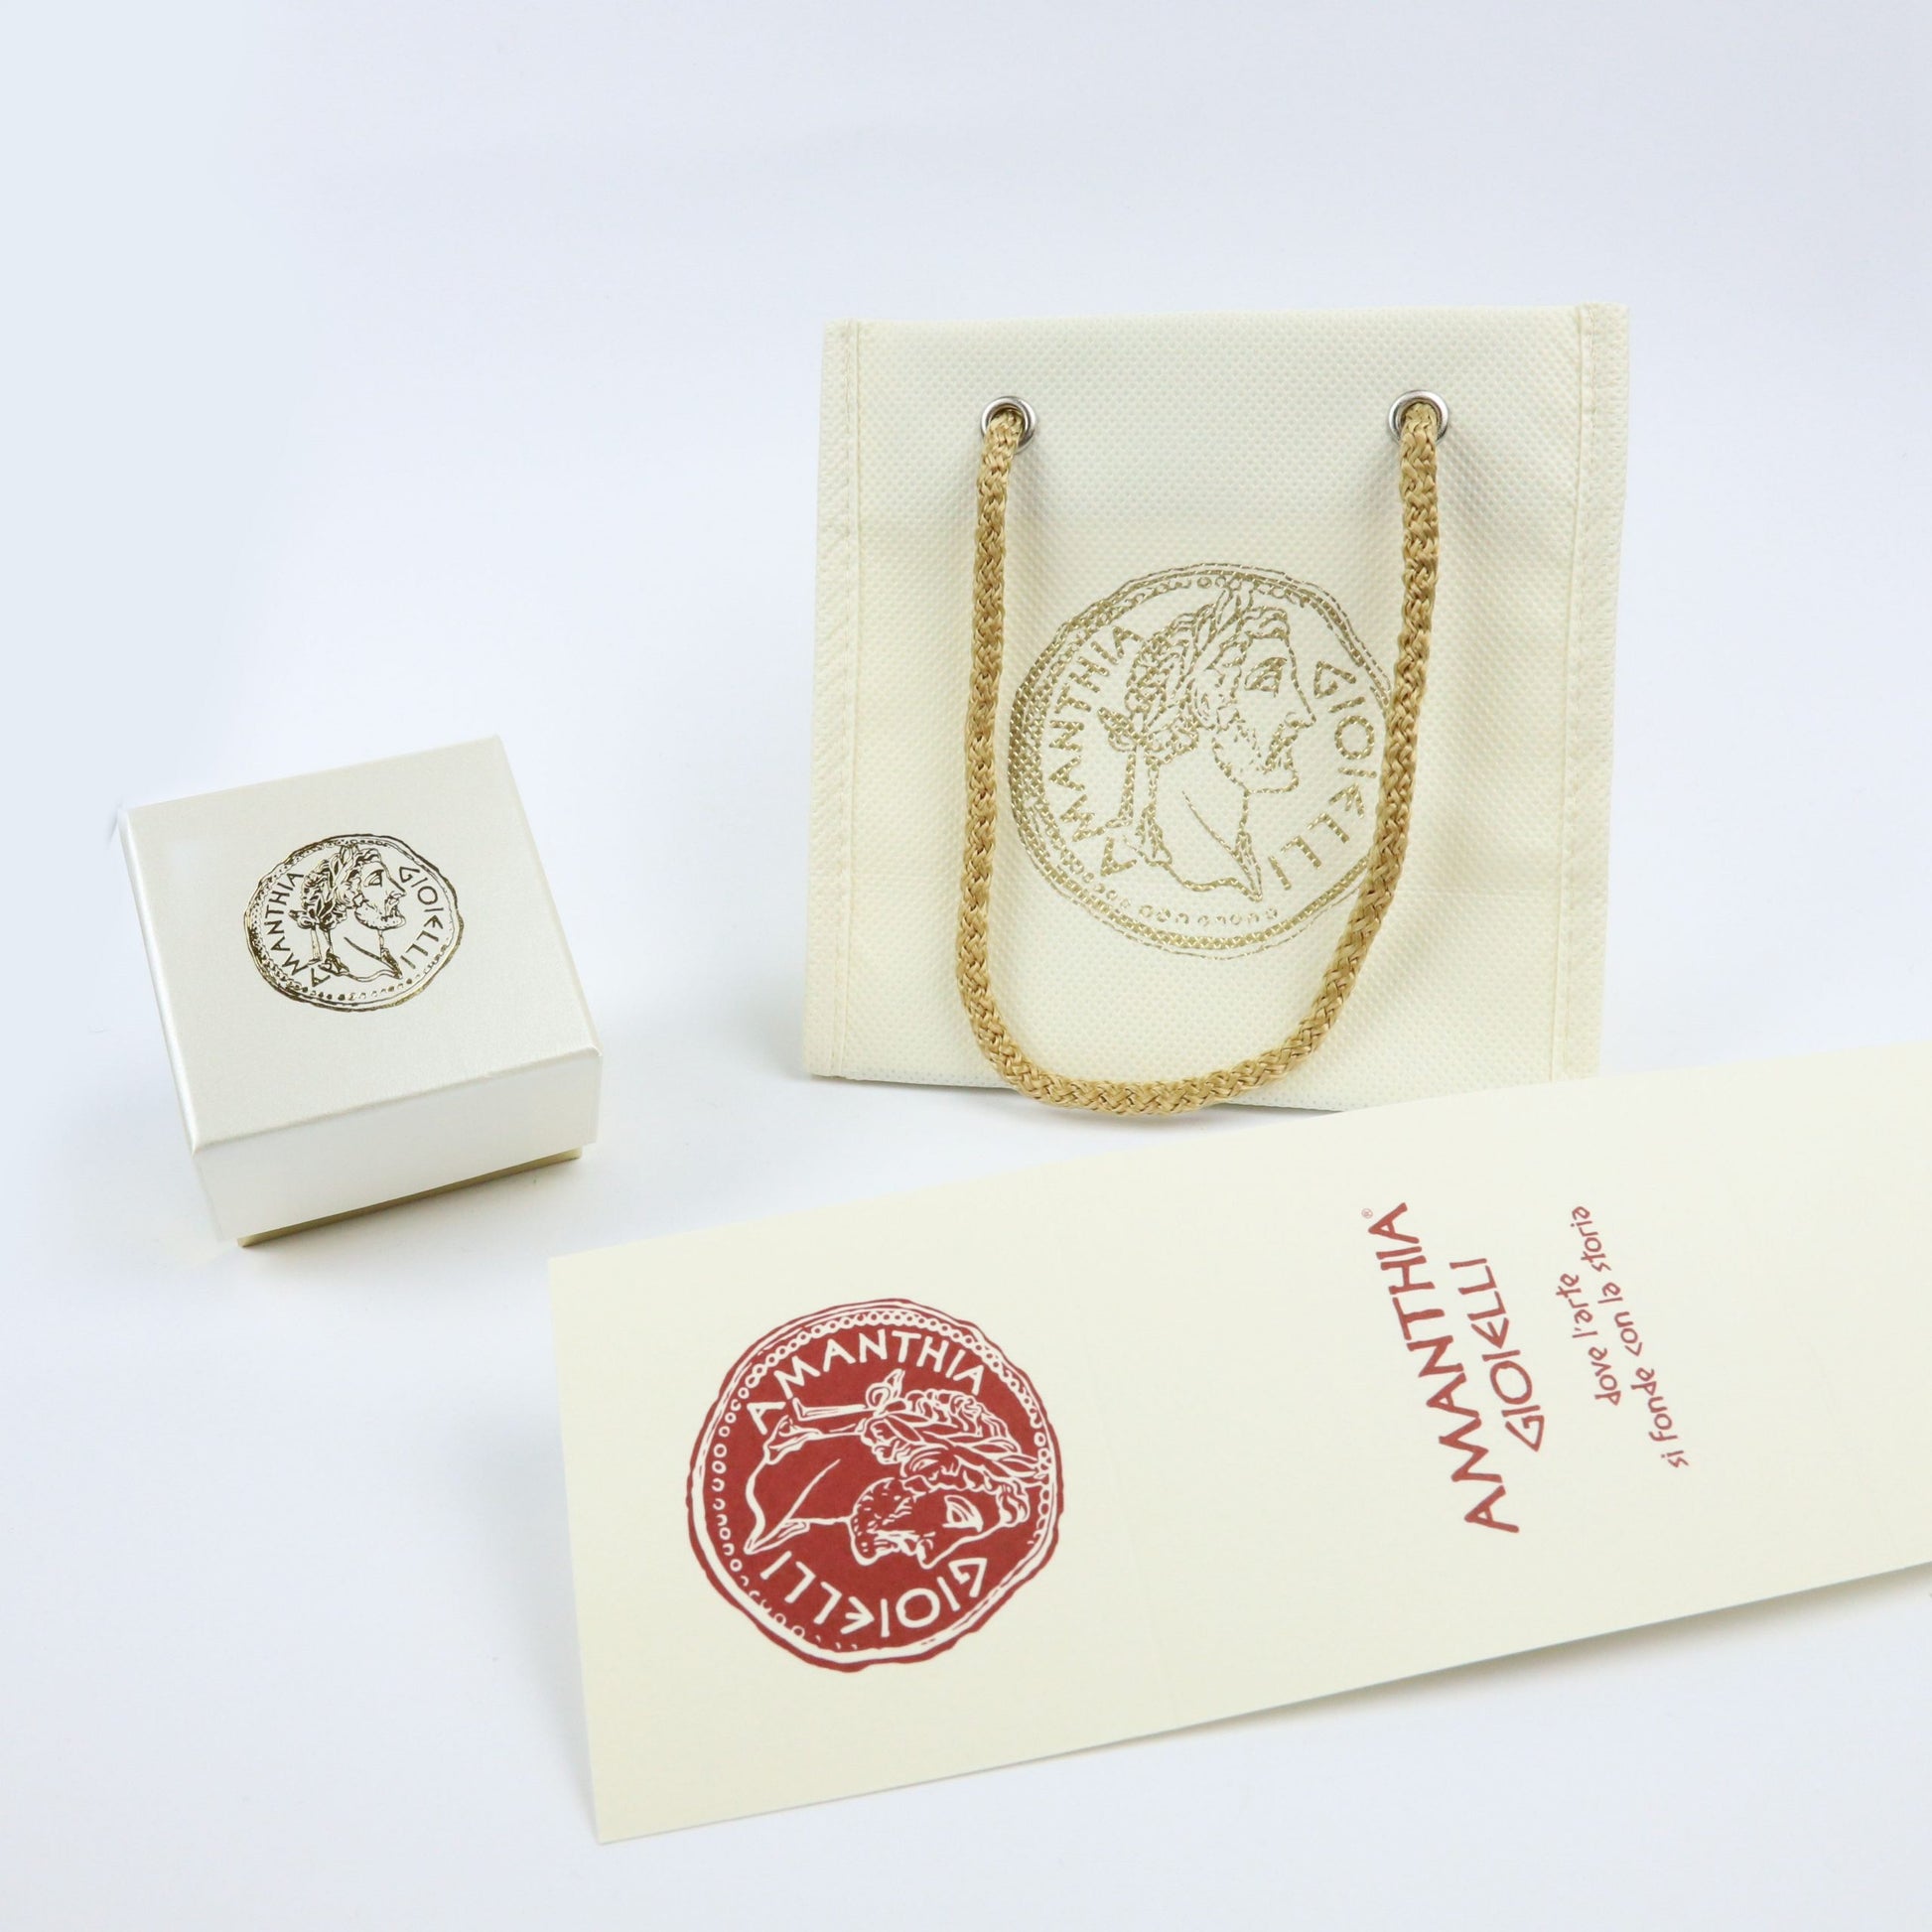 Collana Bizantina moneta 500 lire d'epoca - CO.020.LIRA  Amanthia   